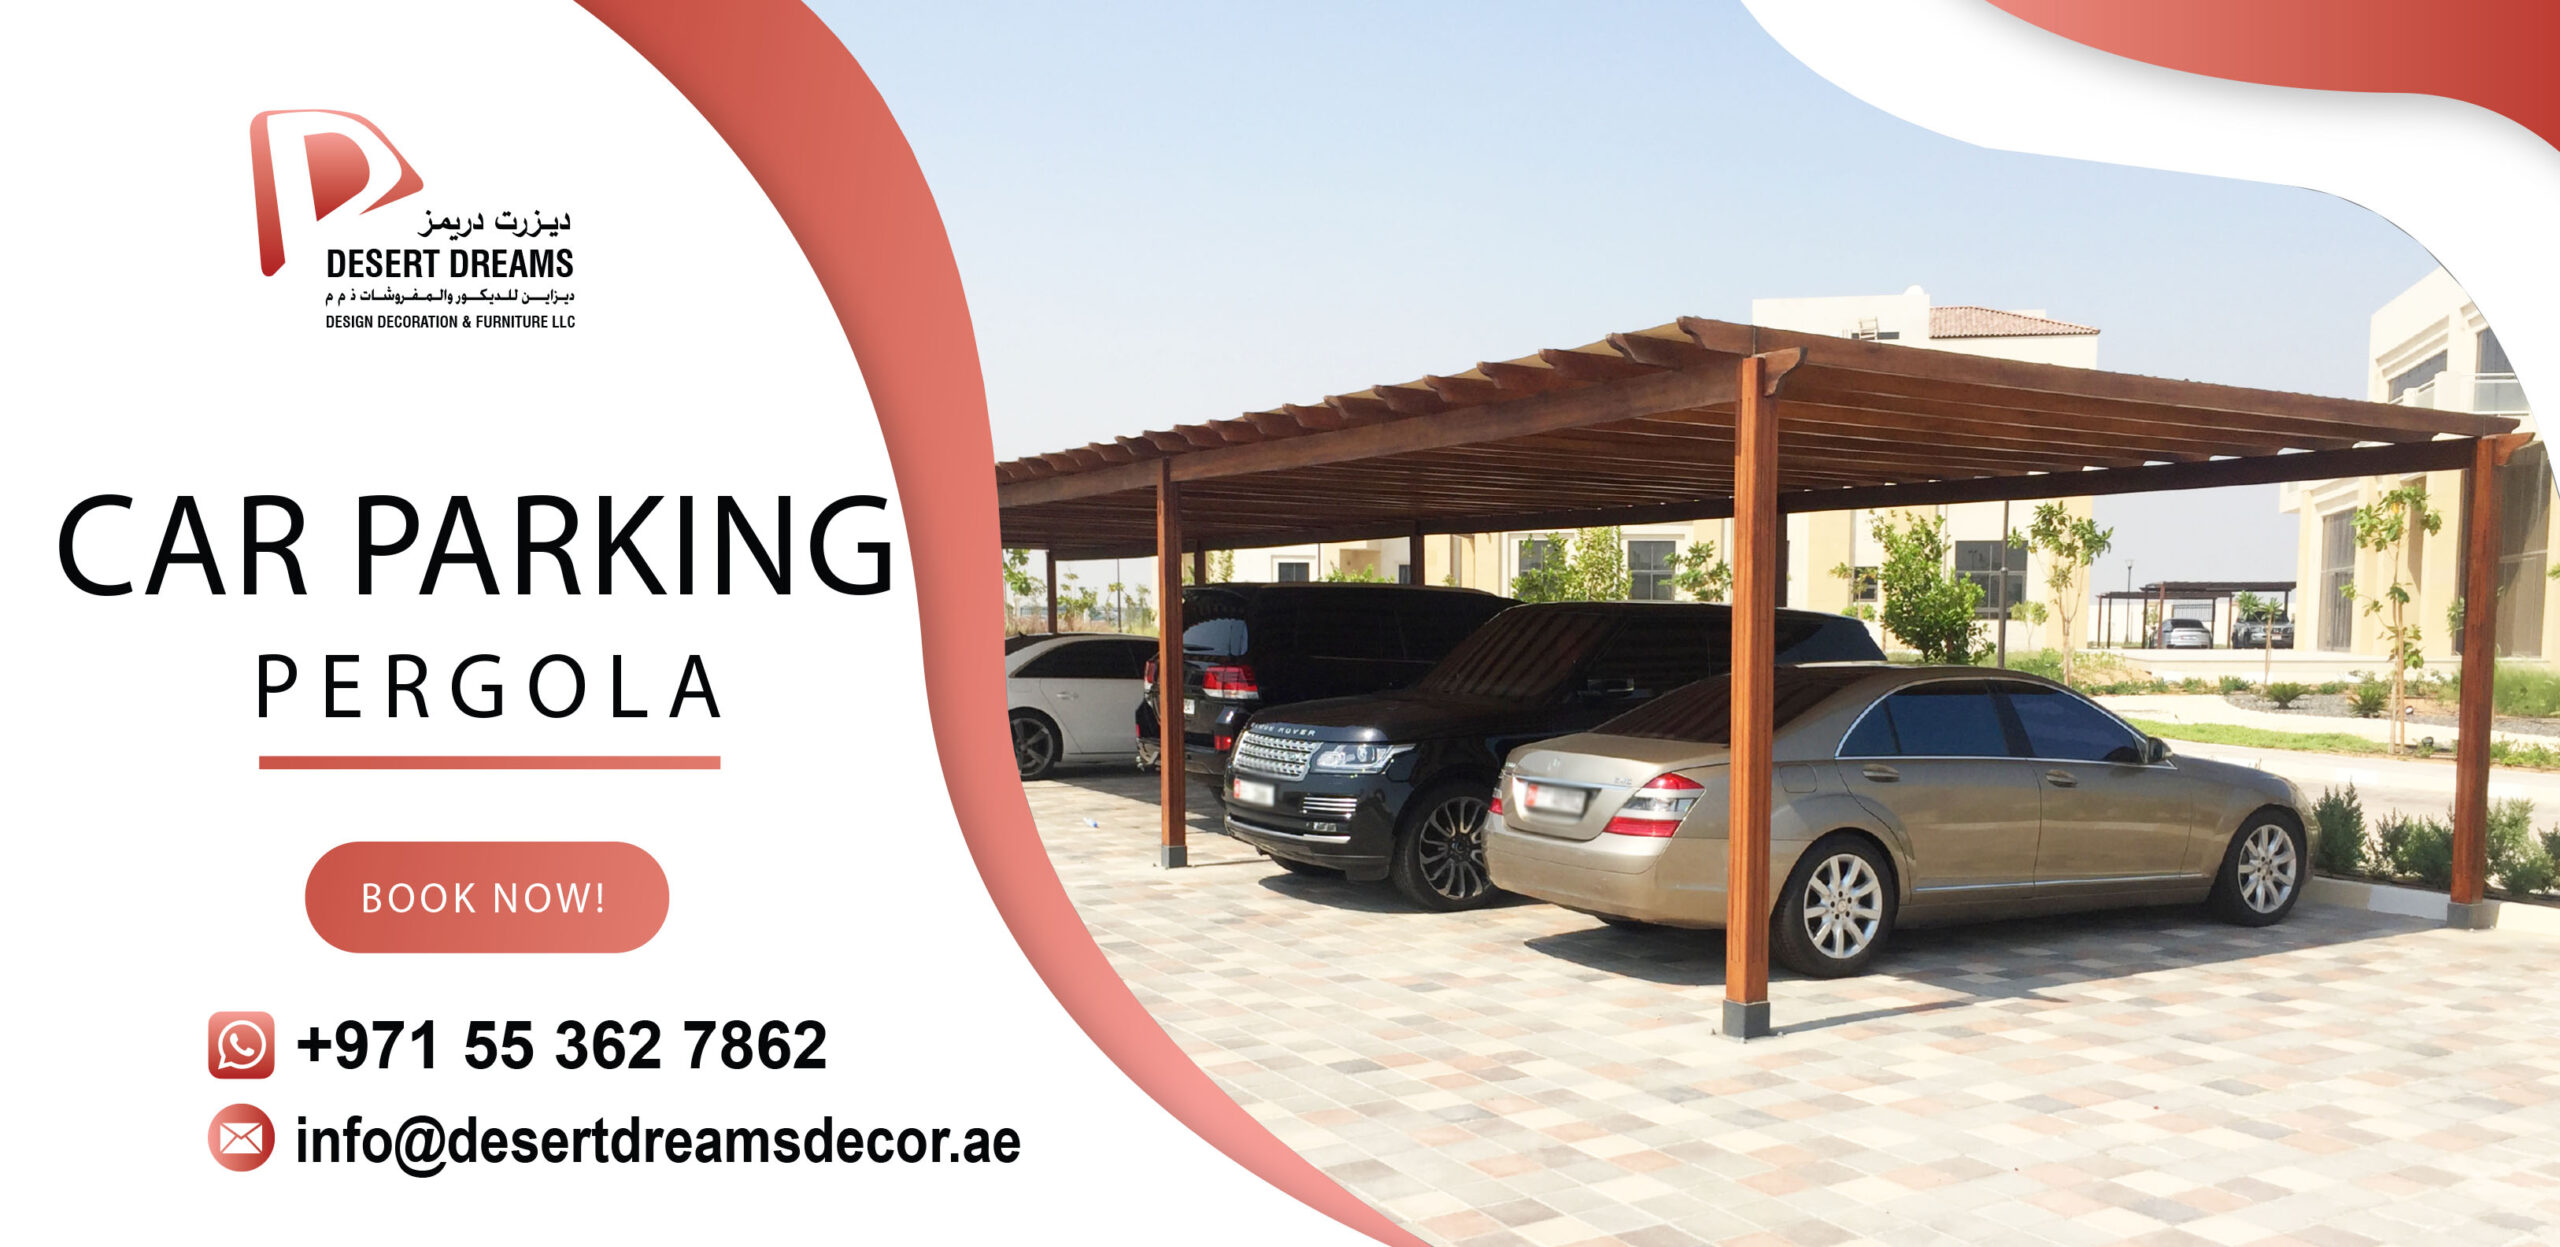 Car Parking Pergola Dubai_Car Parking Pergola Uae_Car Parking Pergola Abu Dhabi (2).jpg